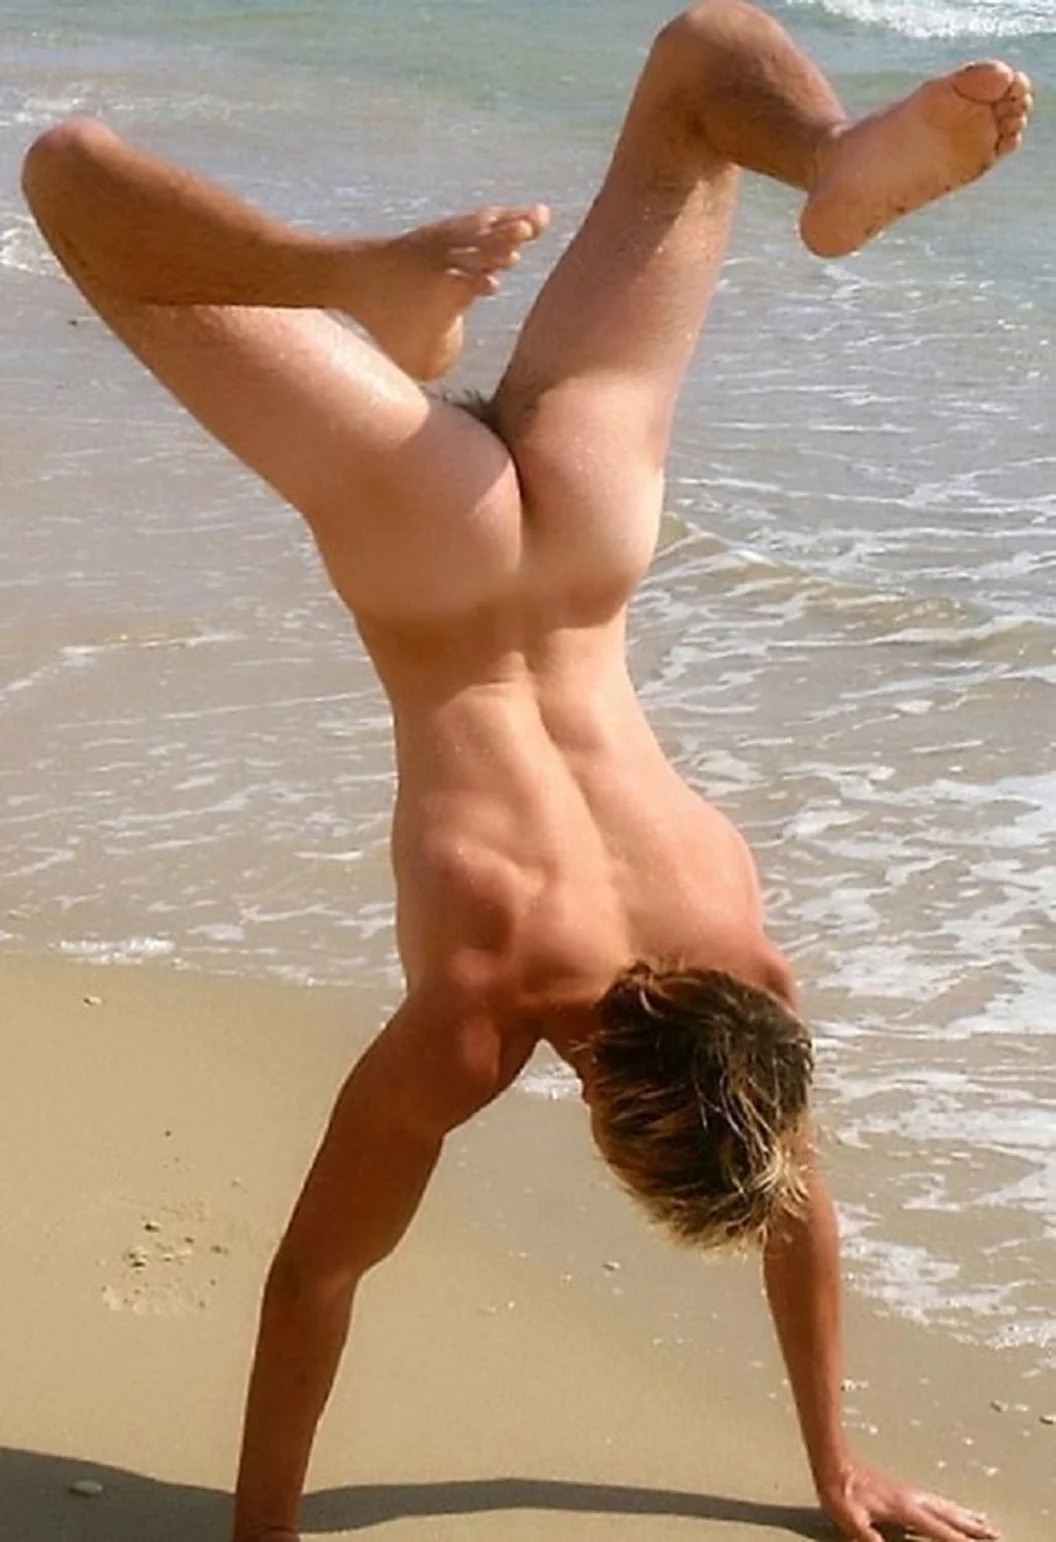 guy-doing-hand-stand-on-beach.jpeg